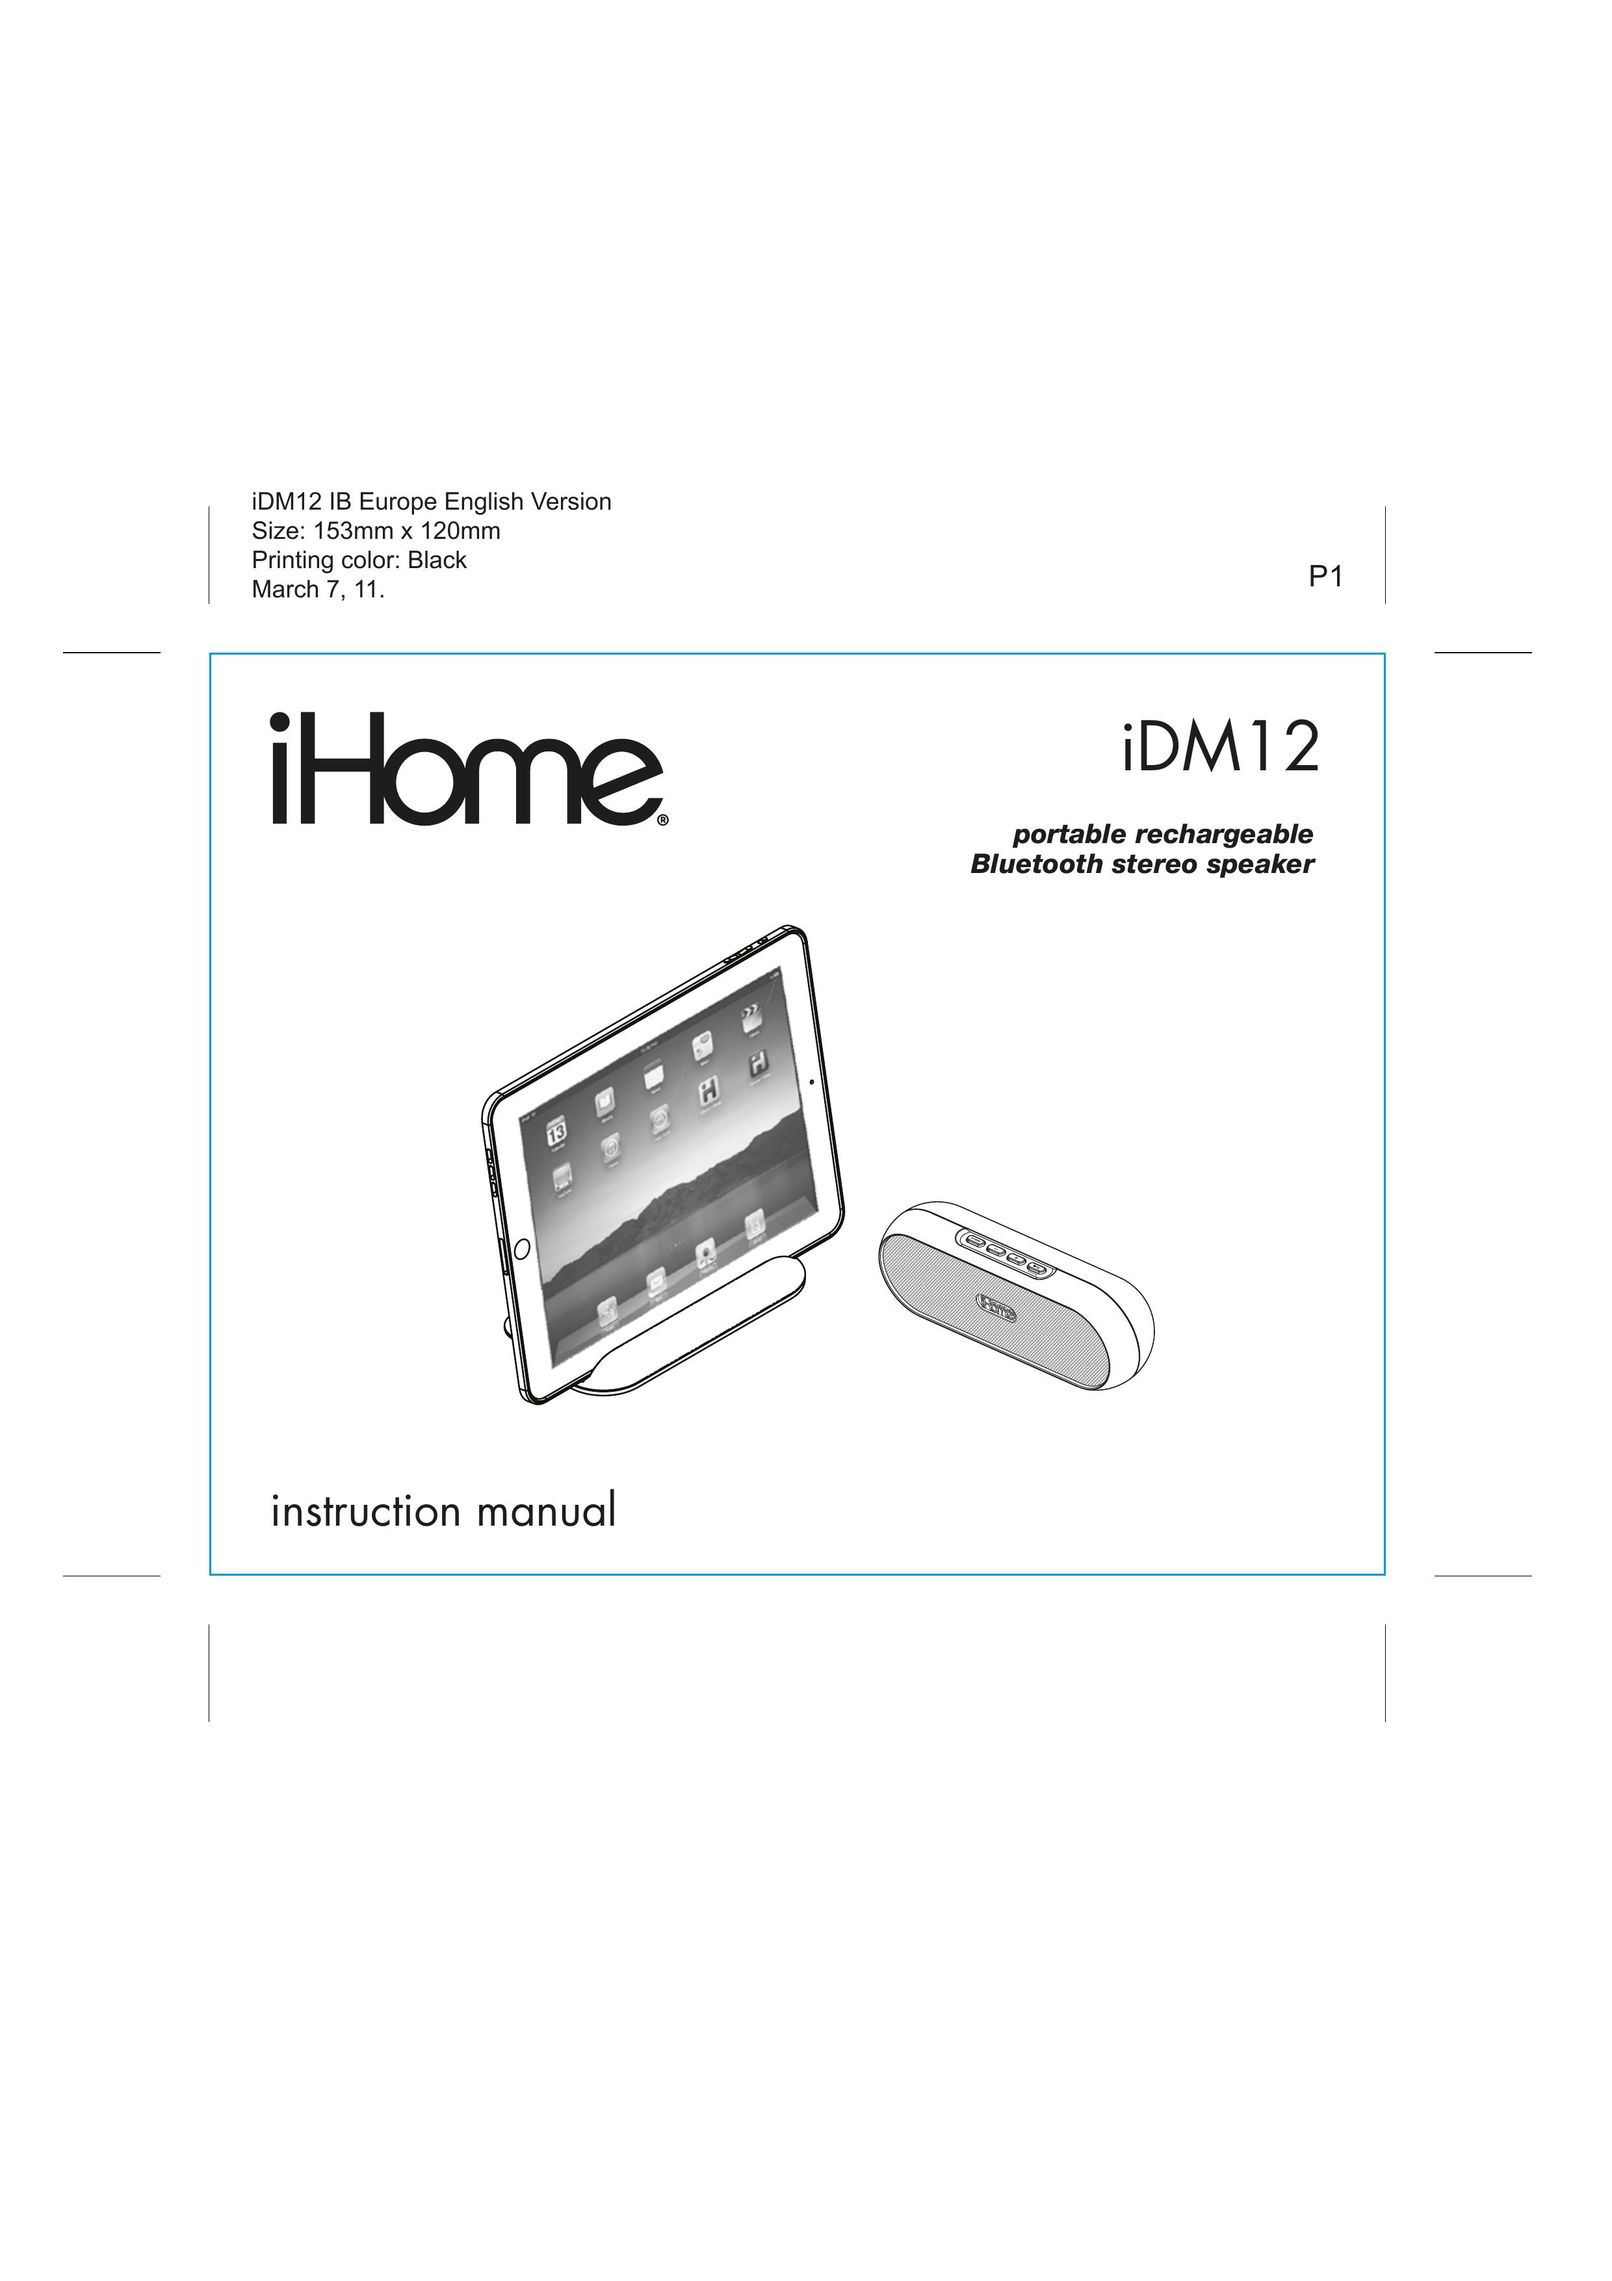 iHome IDM12 Portable Speaker User Manual